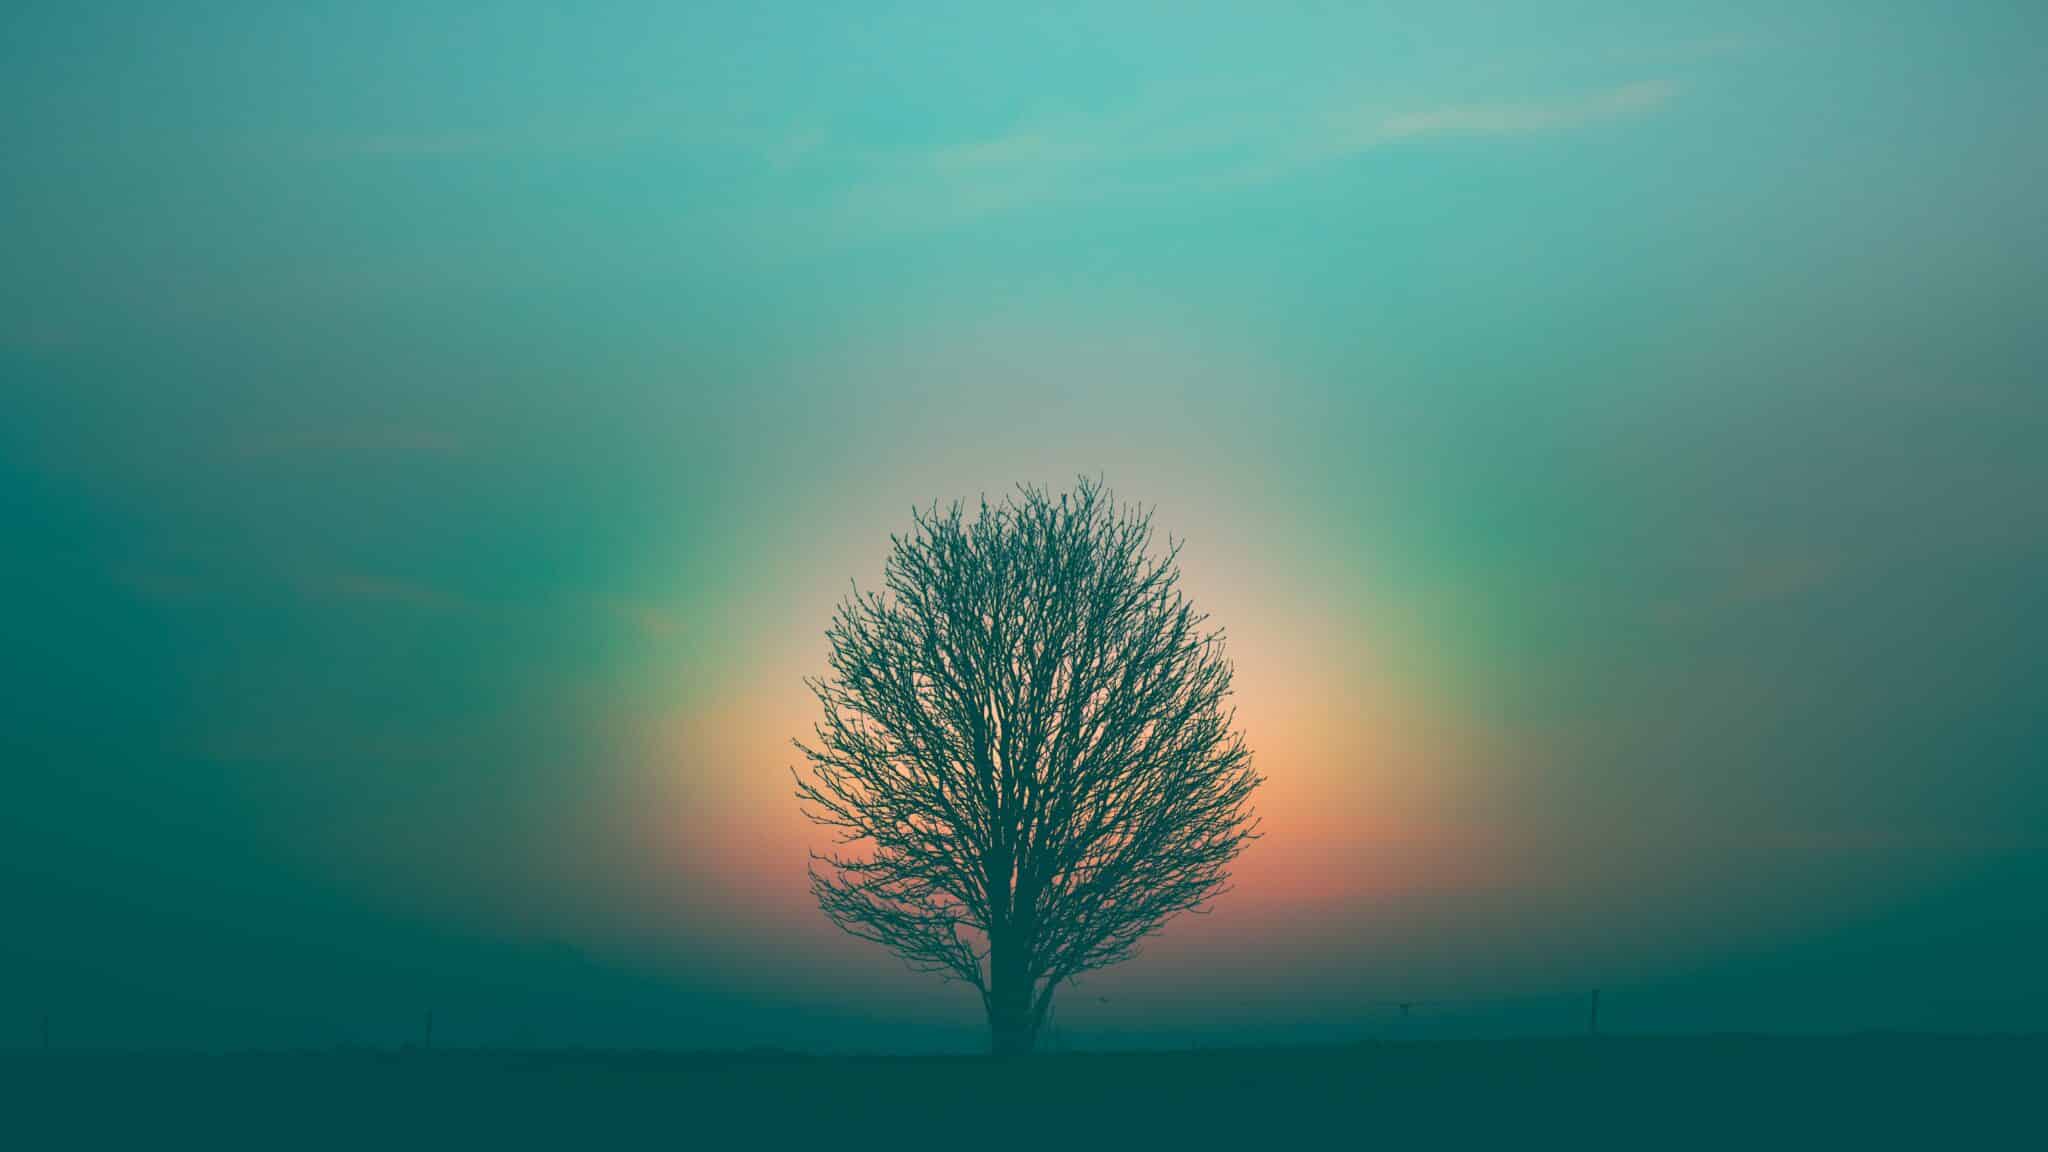 tree and sunset | Photo by Marek Piwnicki on Unsplash